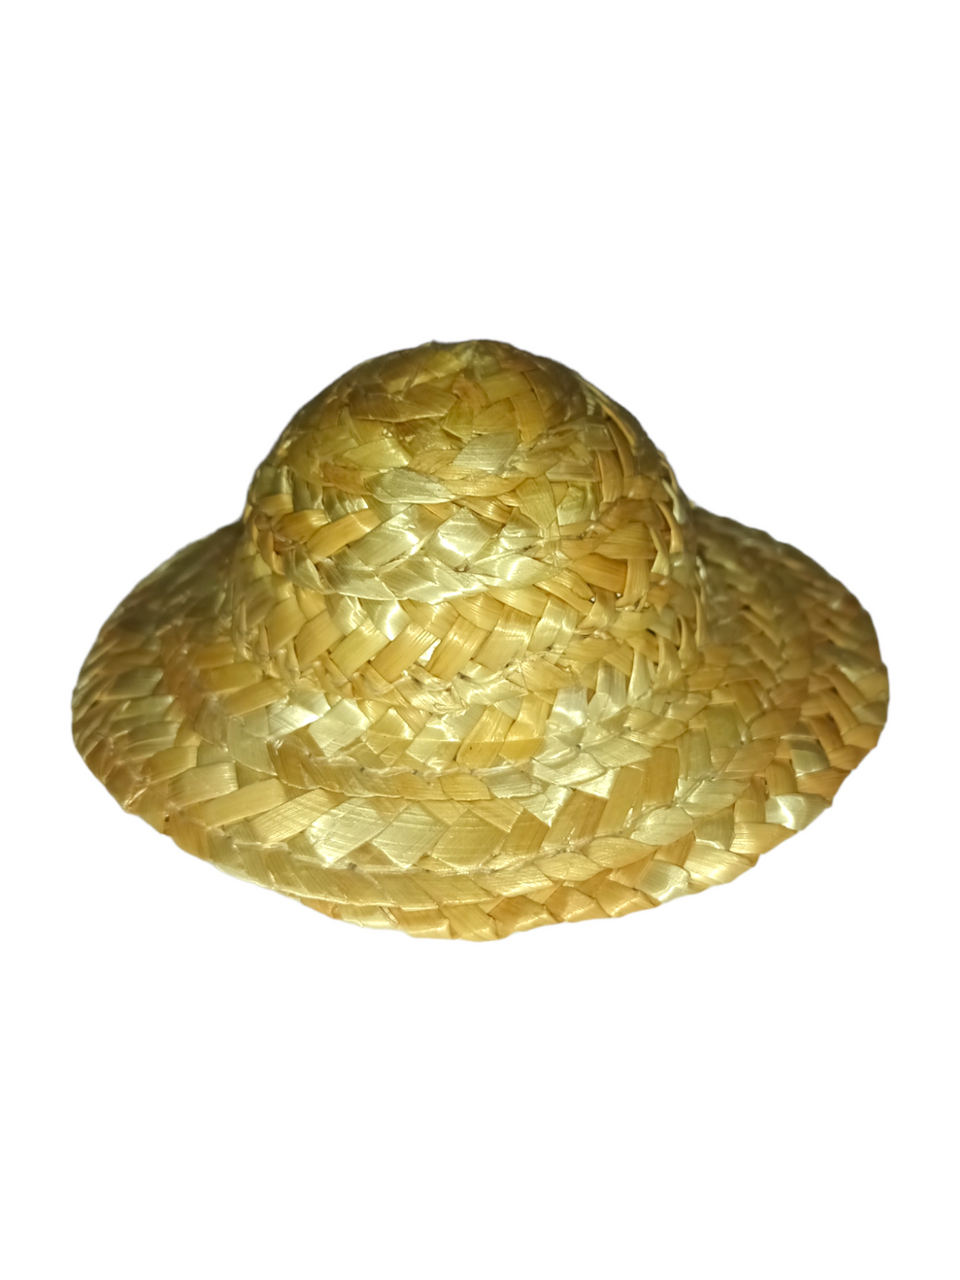 Orisha Eleggua Mini Straw Hat Sombrerito Para Eleggua 2.75 - Lazaro Brand  Spiritual Store